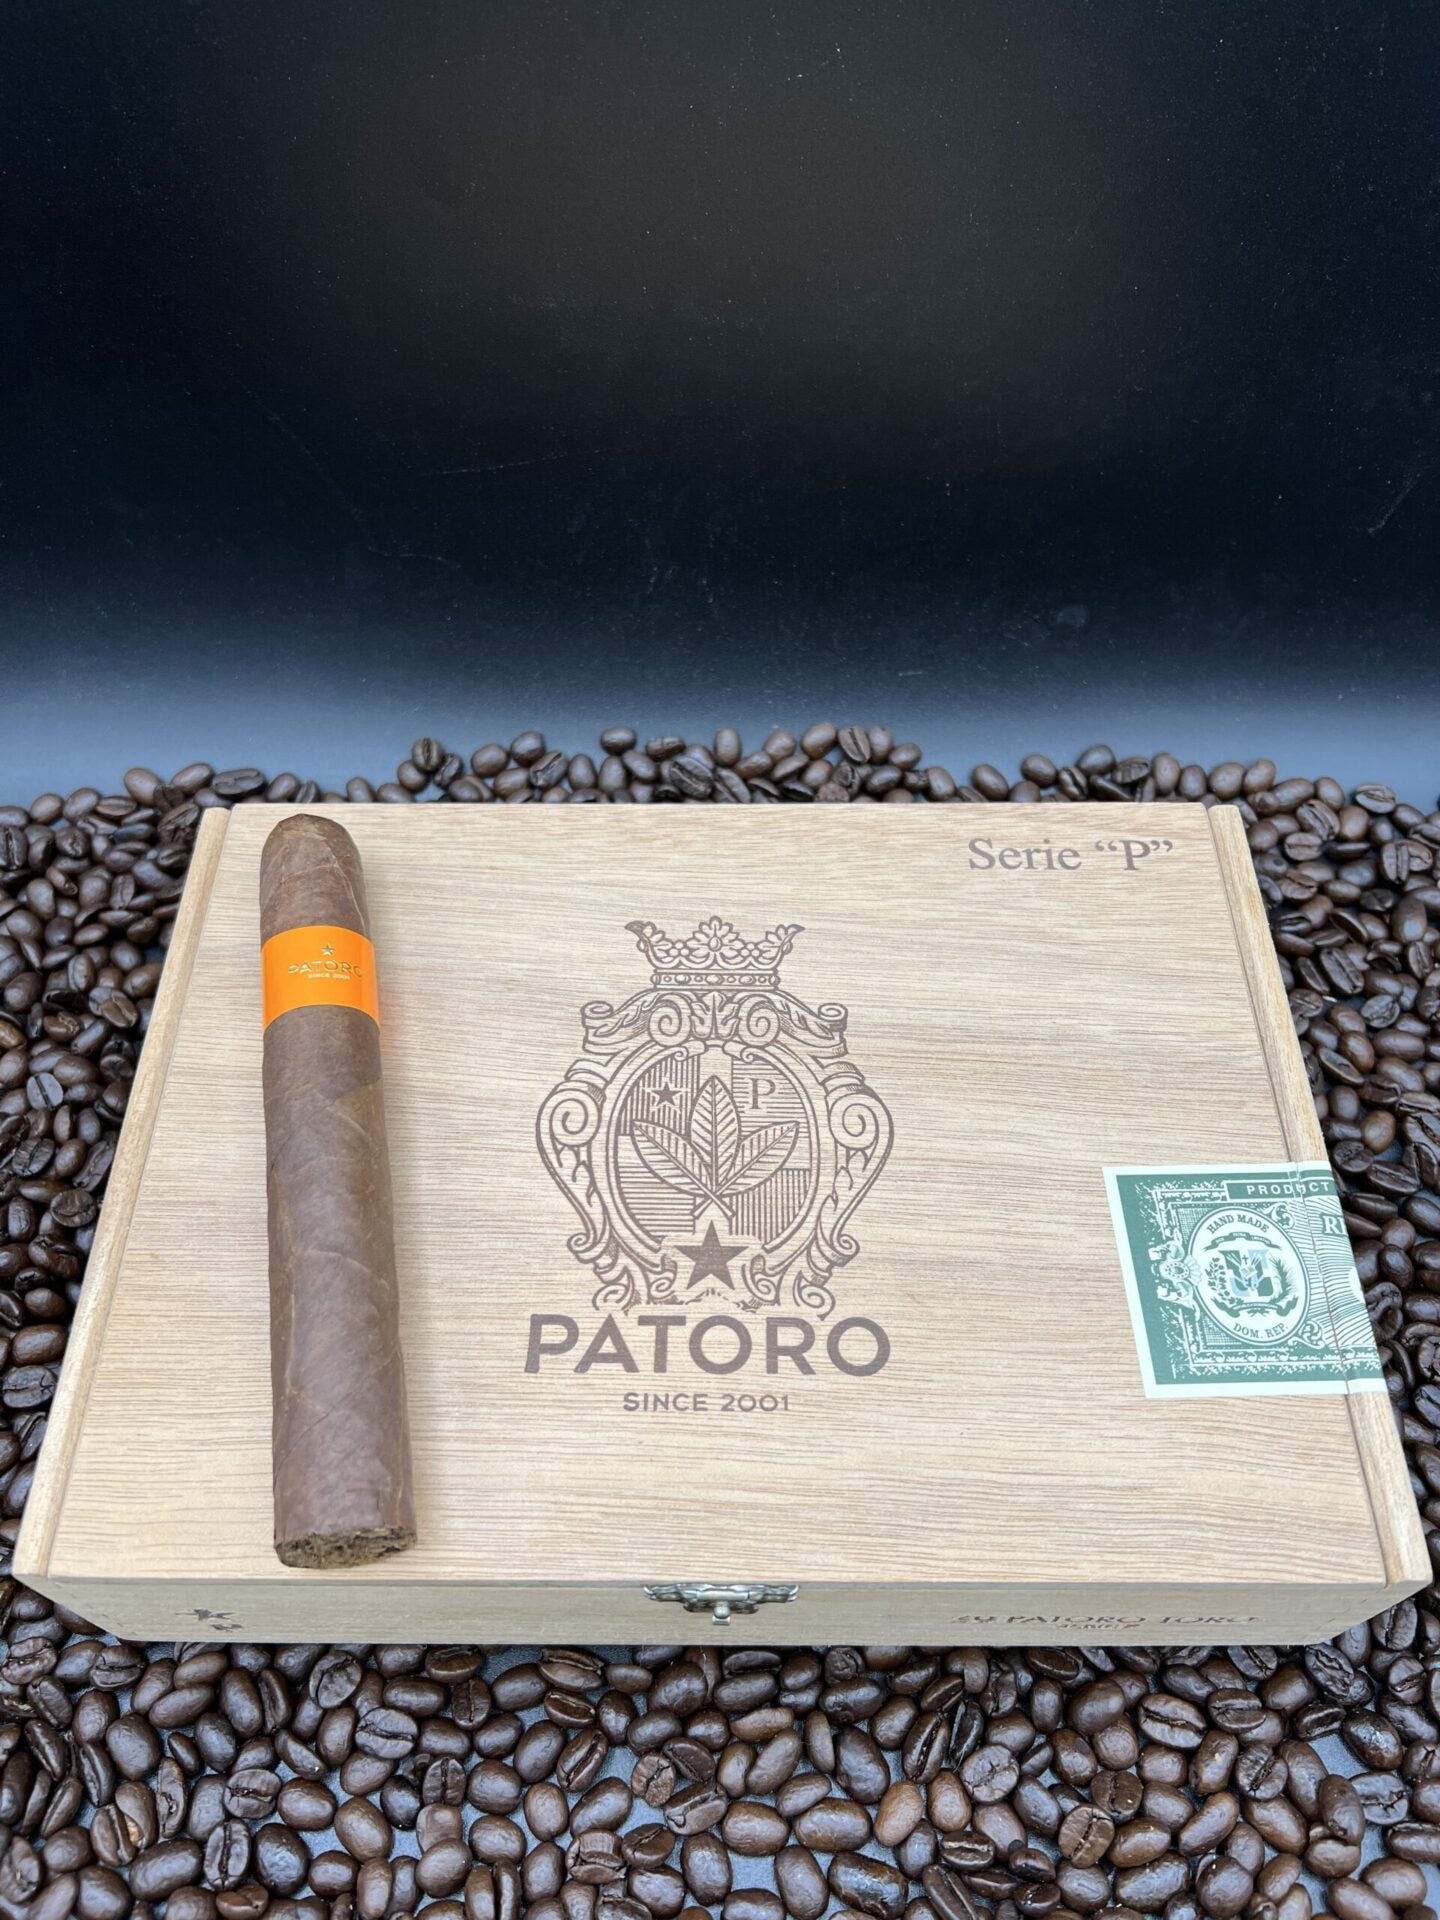 Patoro Serie P Toro cigars supplied by Sir Louis Cigars